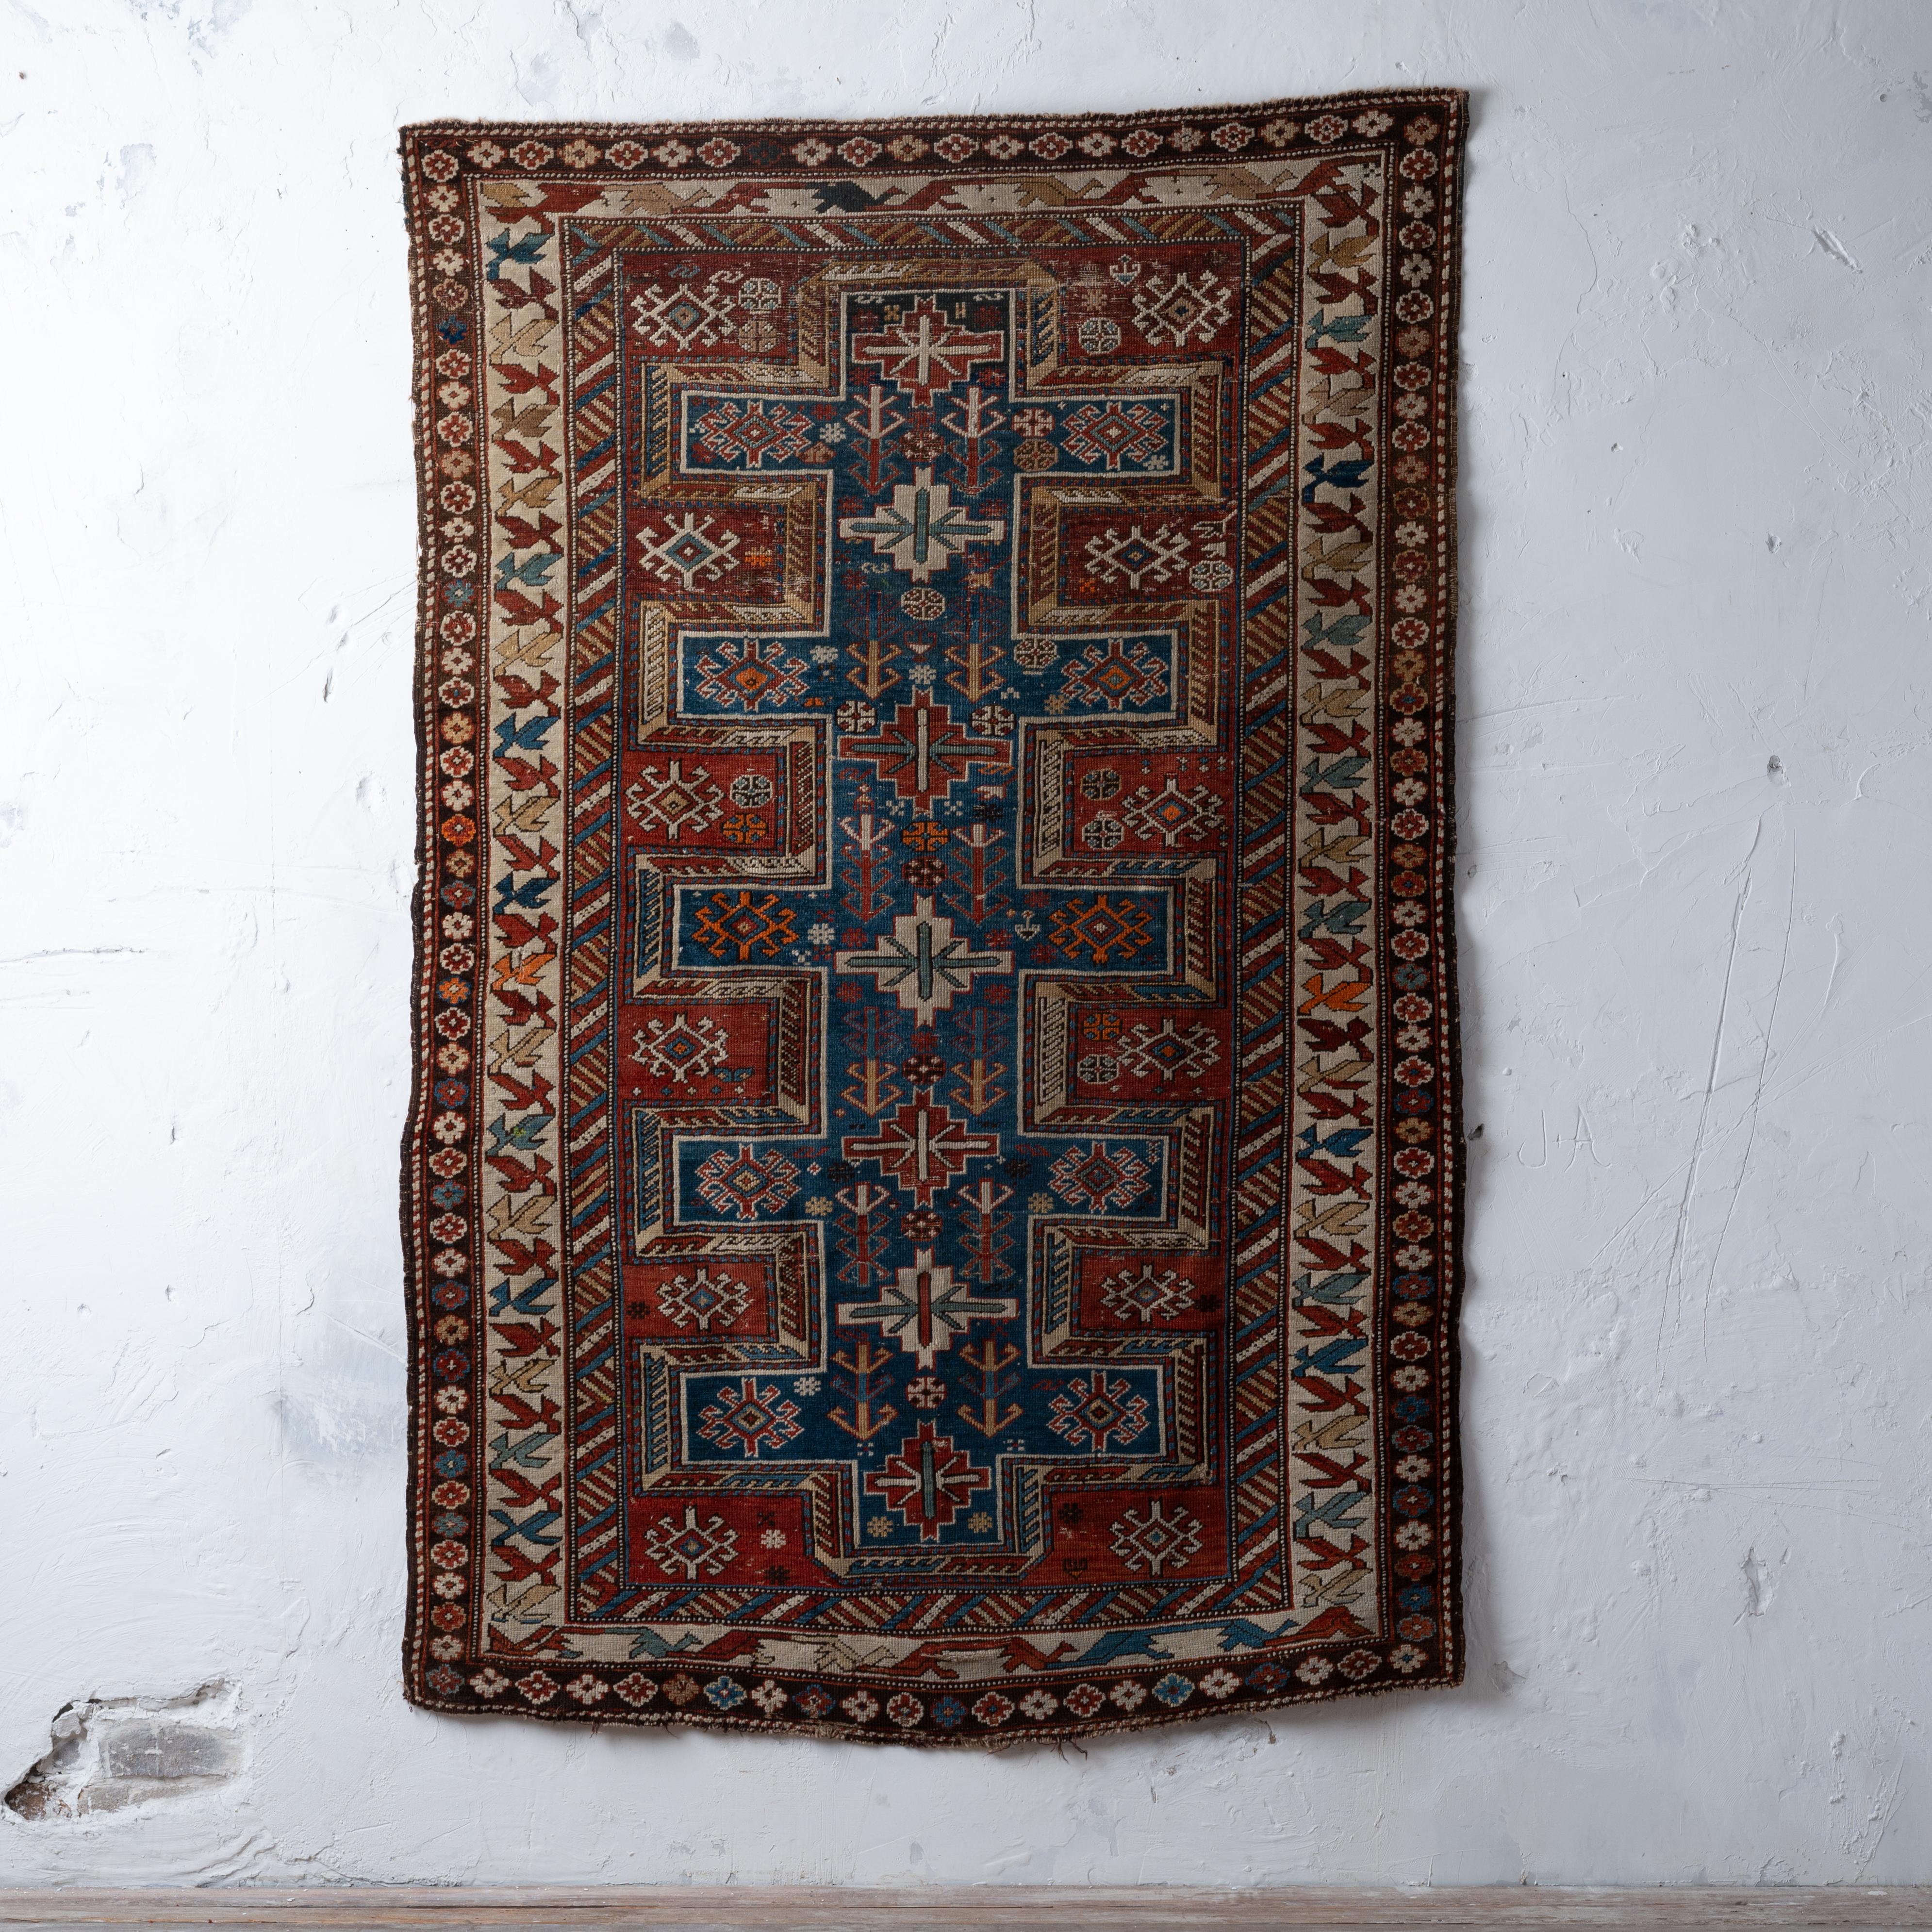 An Ordutch Konagkend Kuba Caucasian rug, circa 1880.

46 ½ by 71 inches


